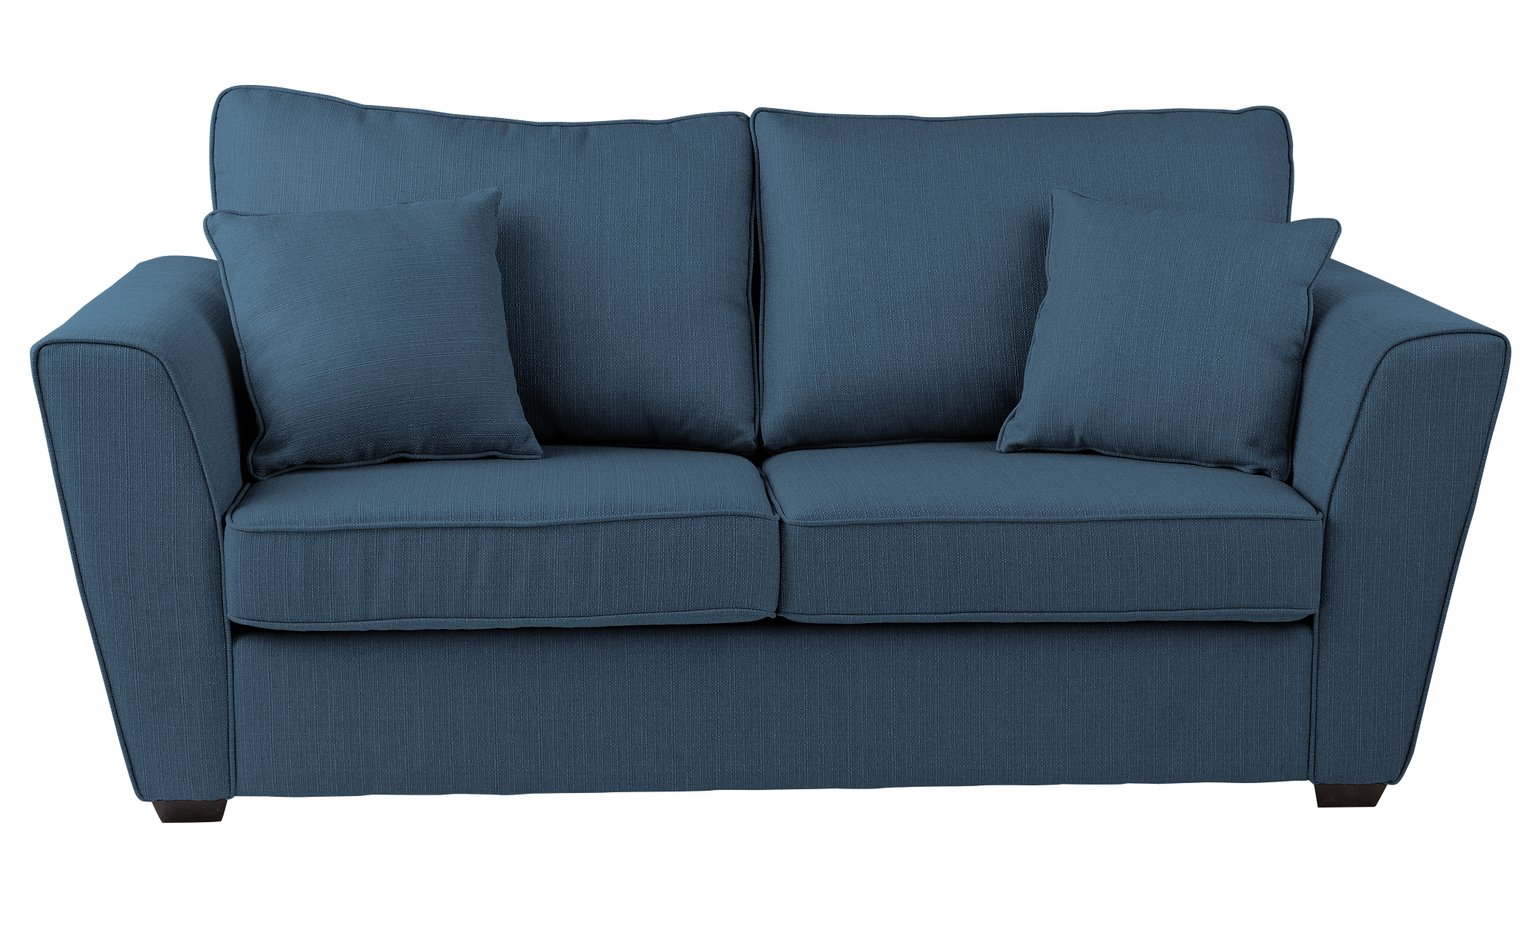 Argos Home Renley 2 Seater Fabric Sofa bed - Blue